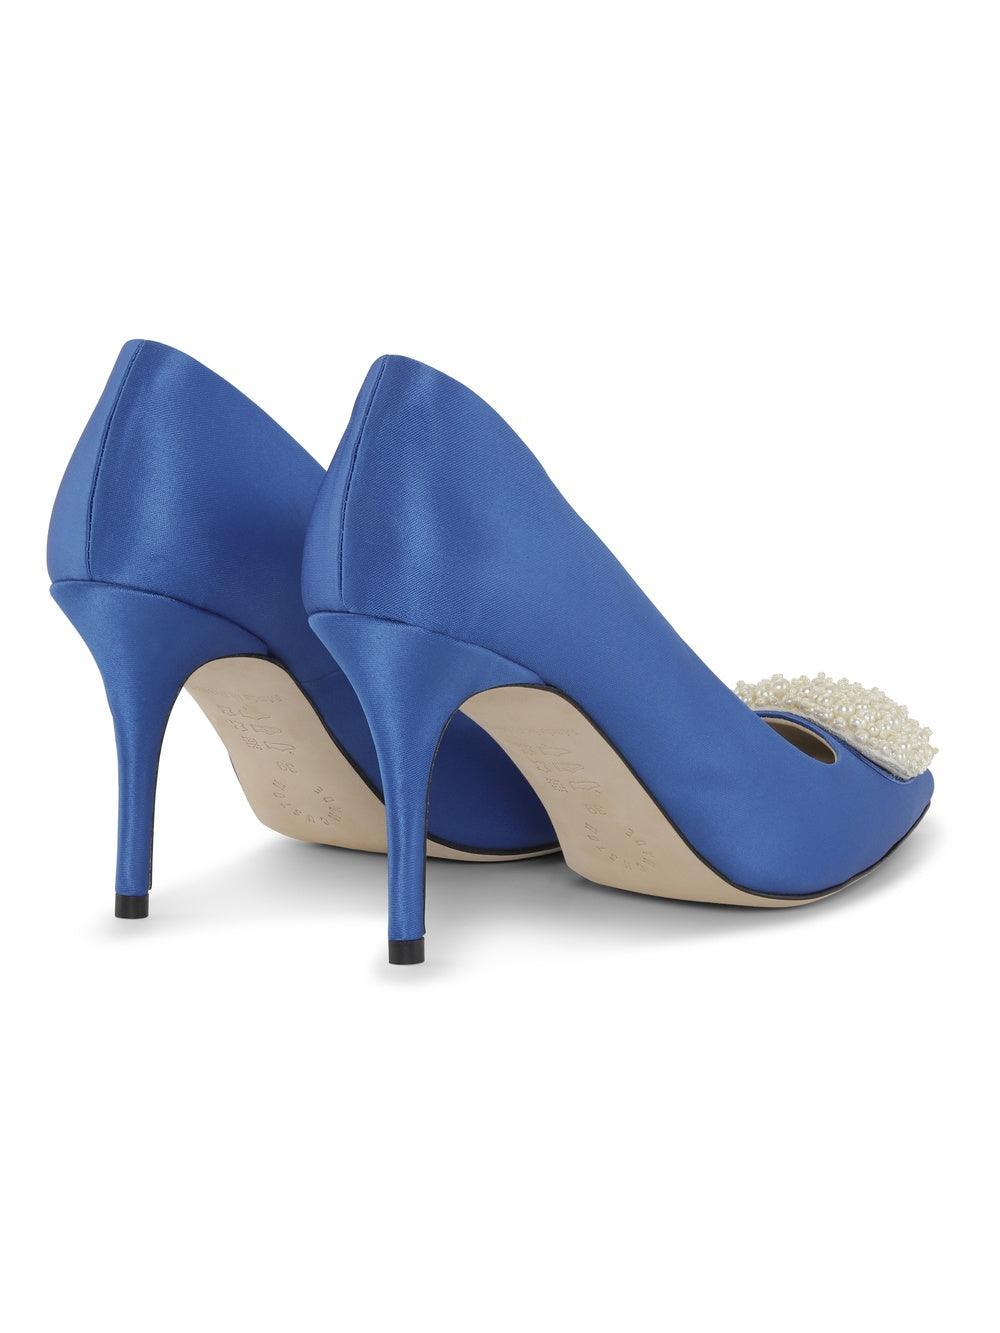 custommade - Aljo Pearl Heart Royal Blue Sandals - 32 The Guild